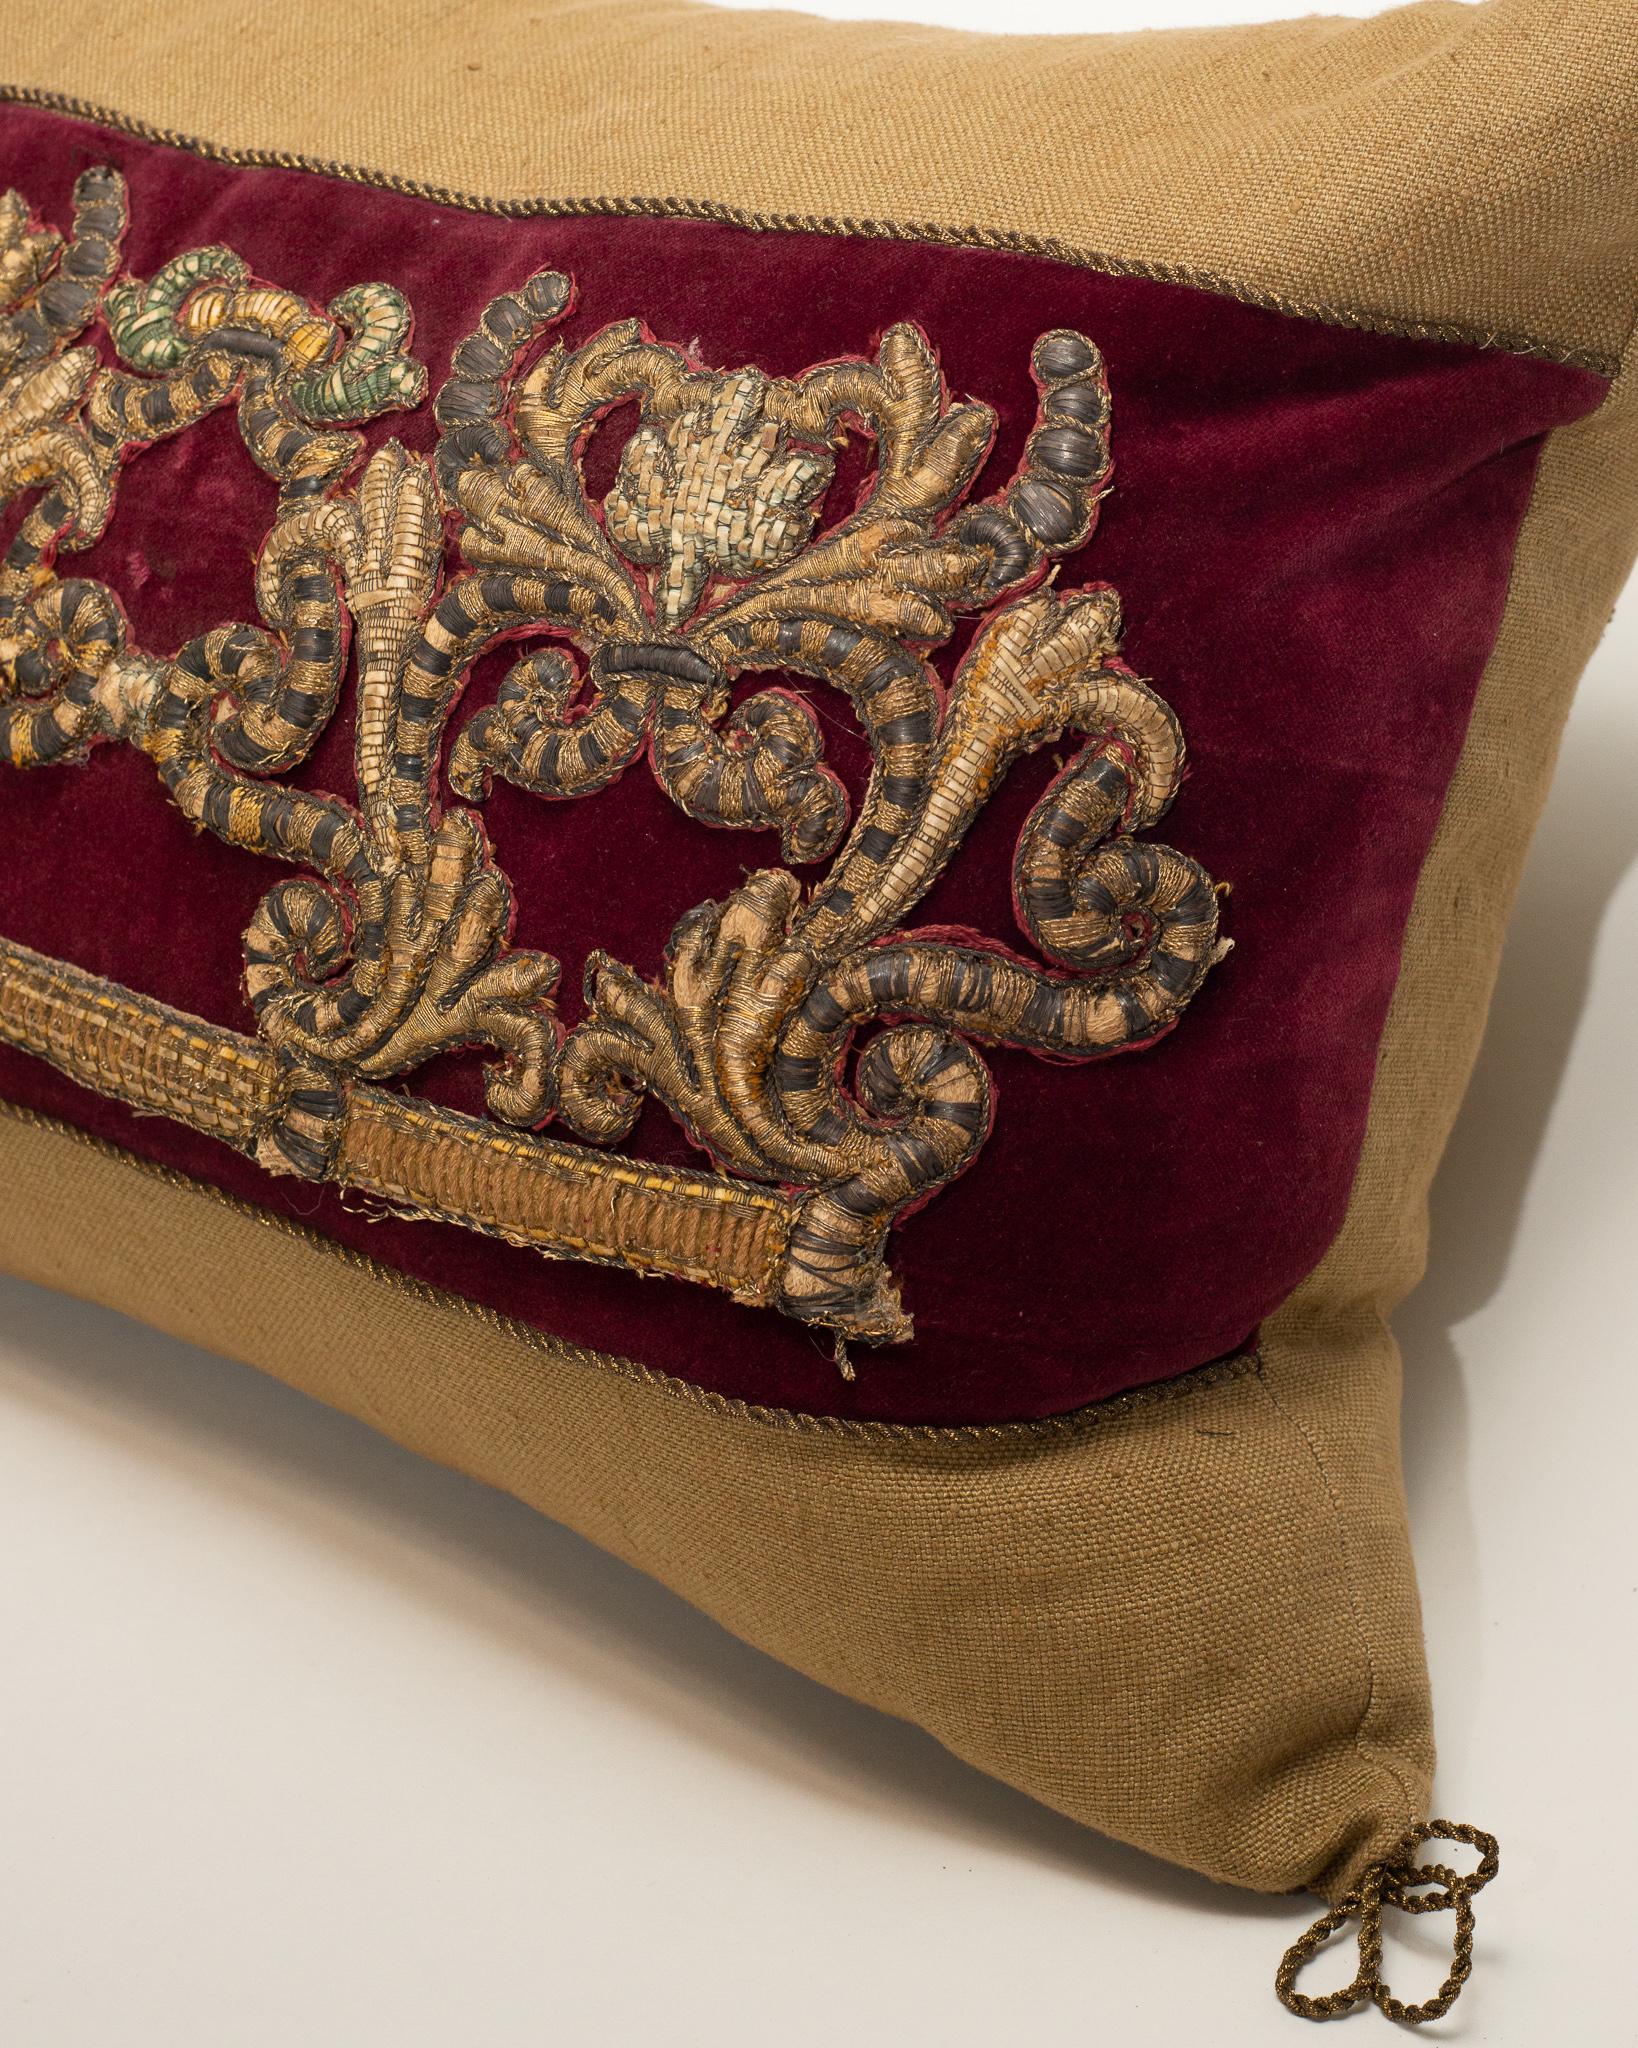 Italian Large Beige Linen Pillow with Burgundy Velvet & Antique Metallic Embroidery For Sale